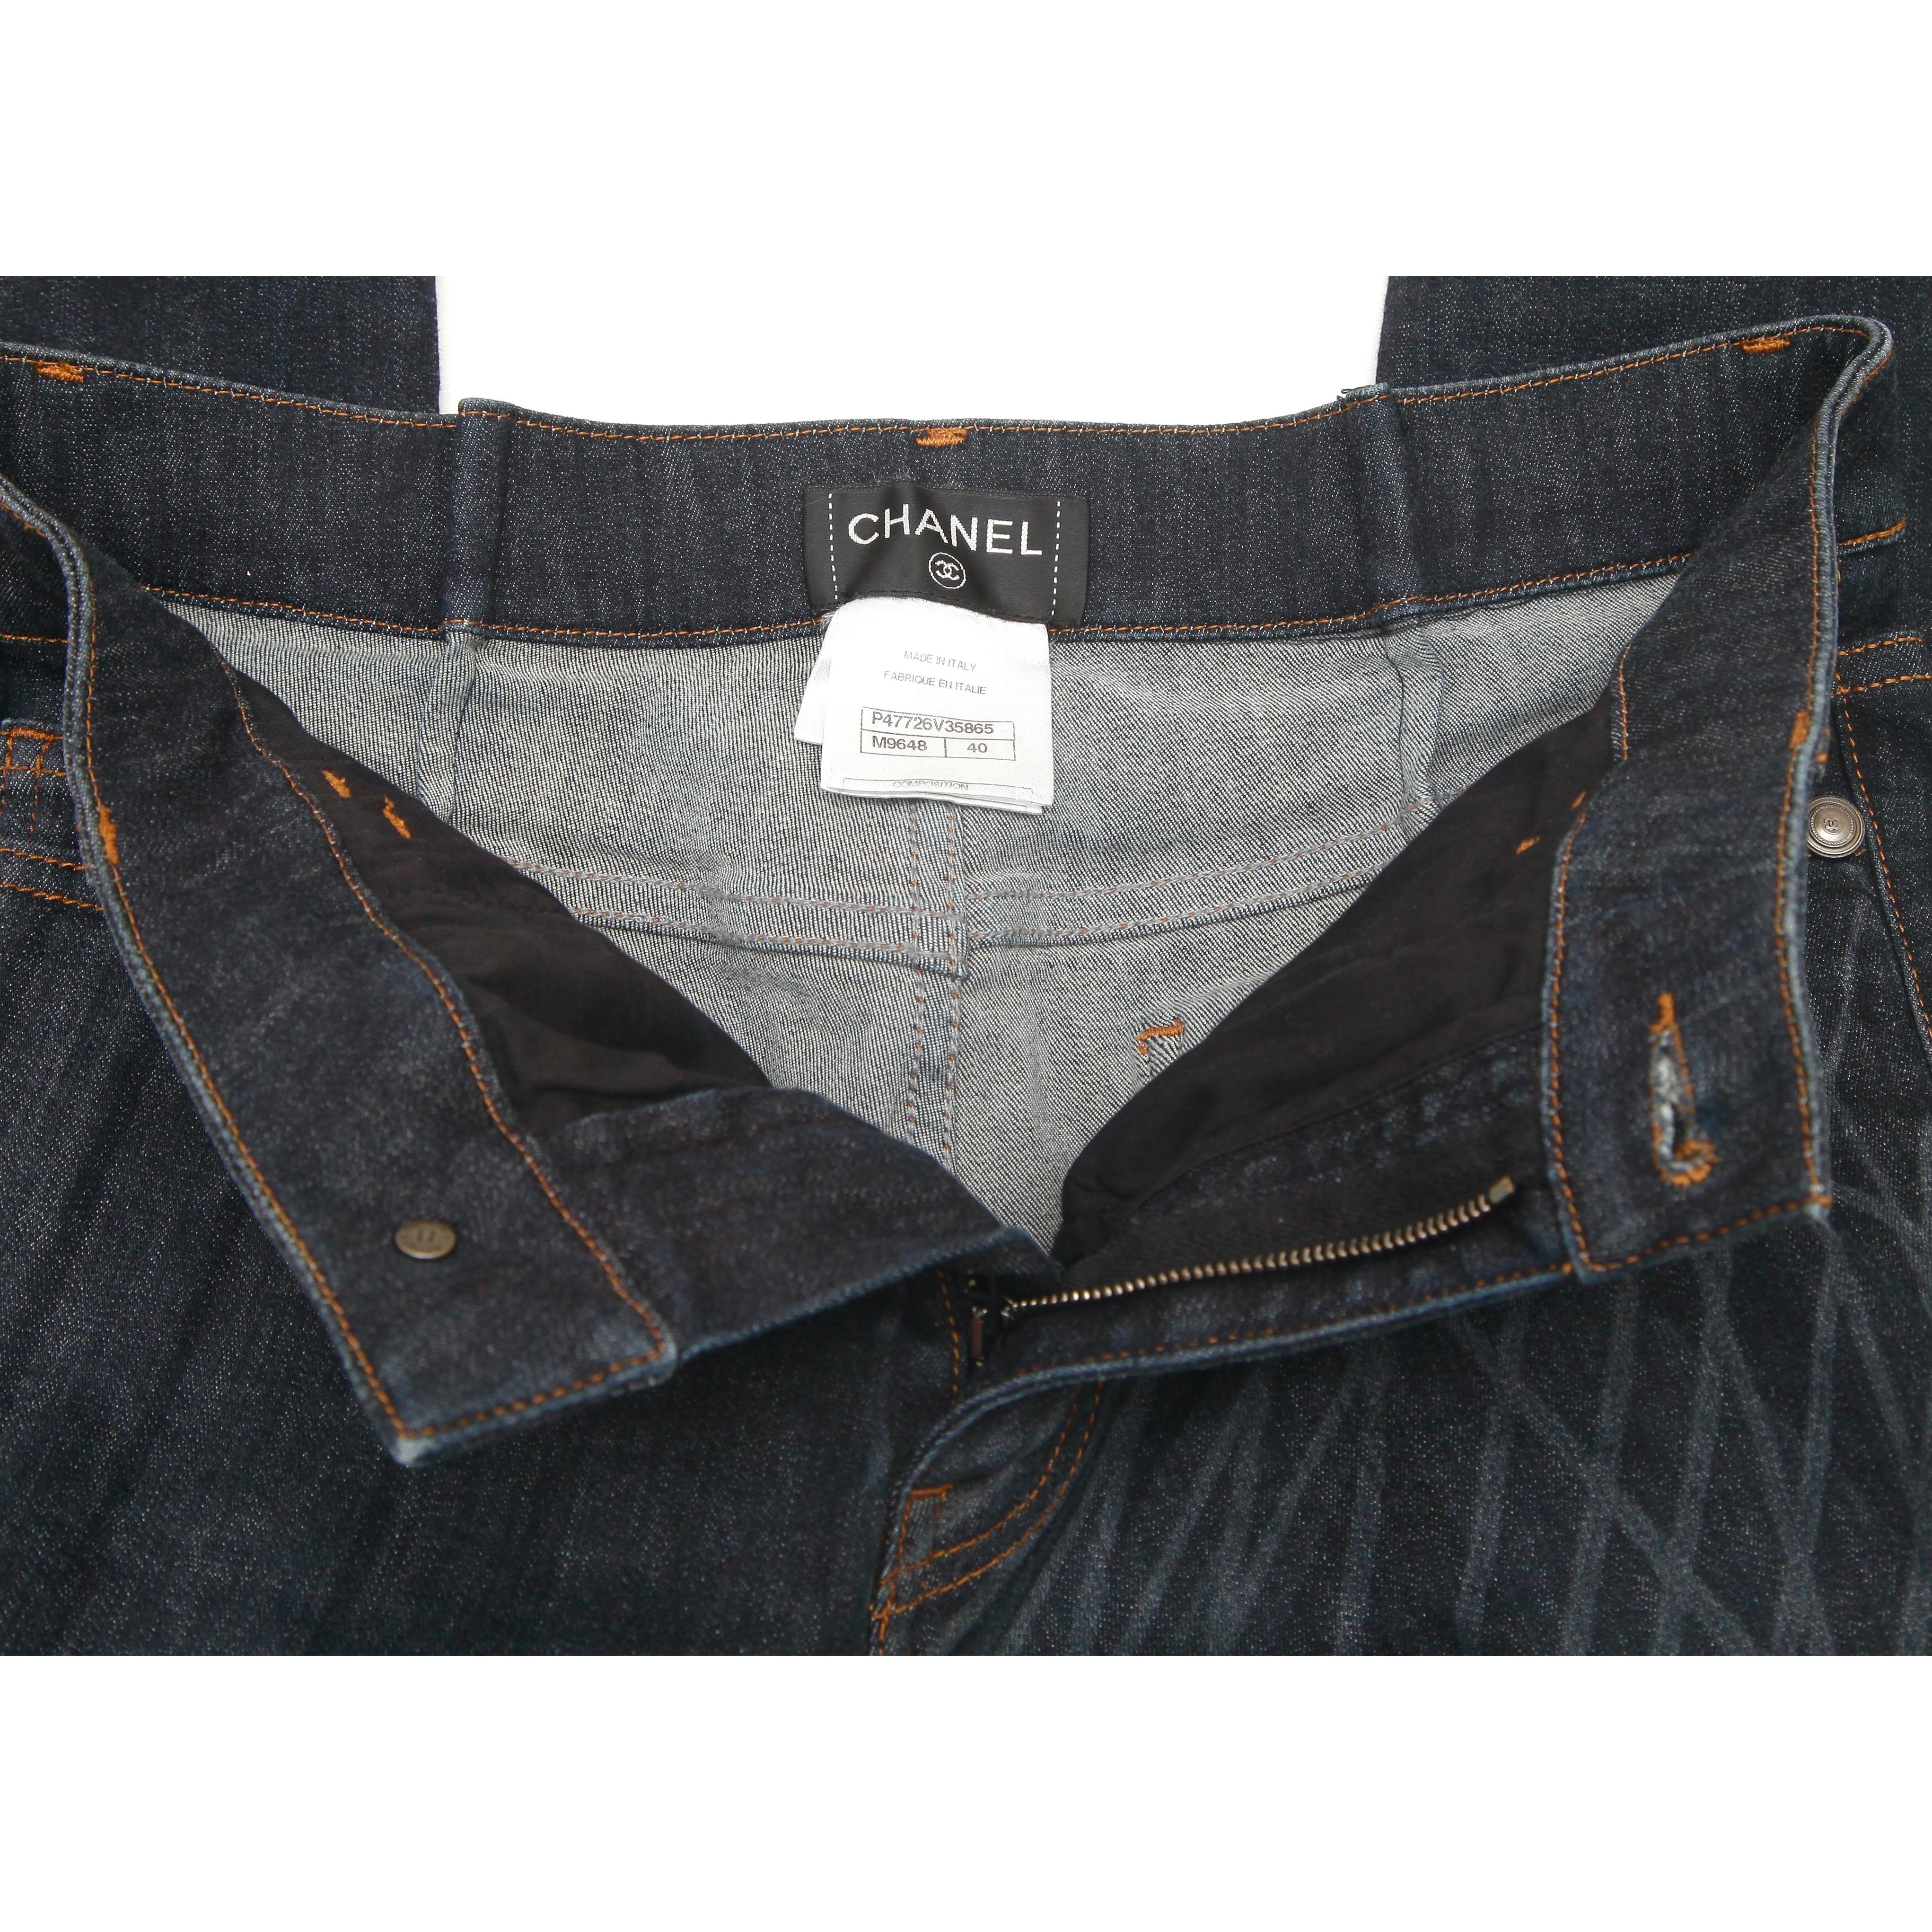 CHANEL Denim Jeans Dark Wash Skinny Leg Mid-Rise Buttons Sz 40 2014 1